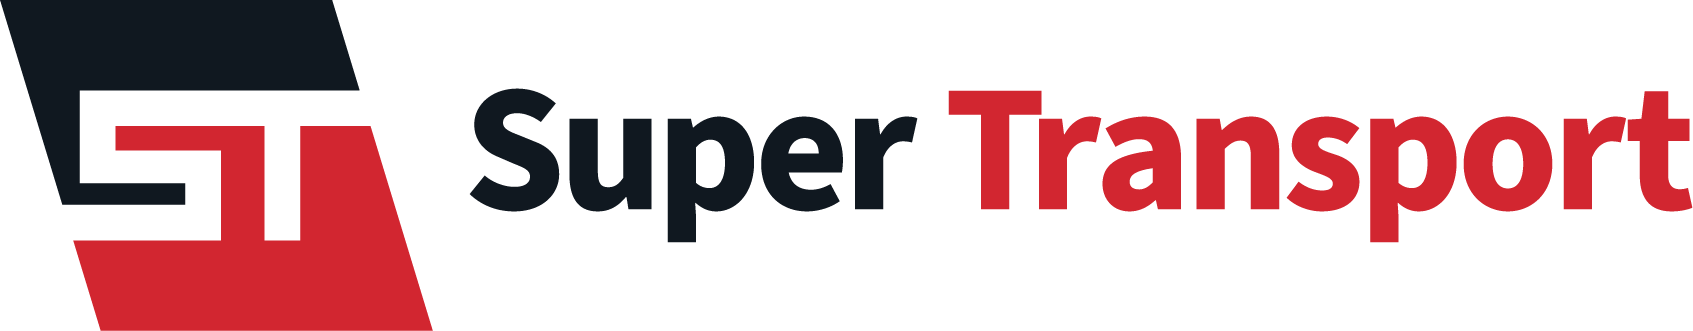 Super Transport Solutions Ltd_Logo_RGB_070622_FINAL (1)